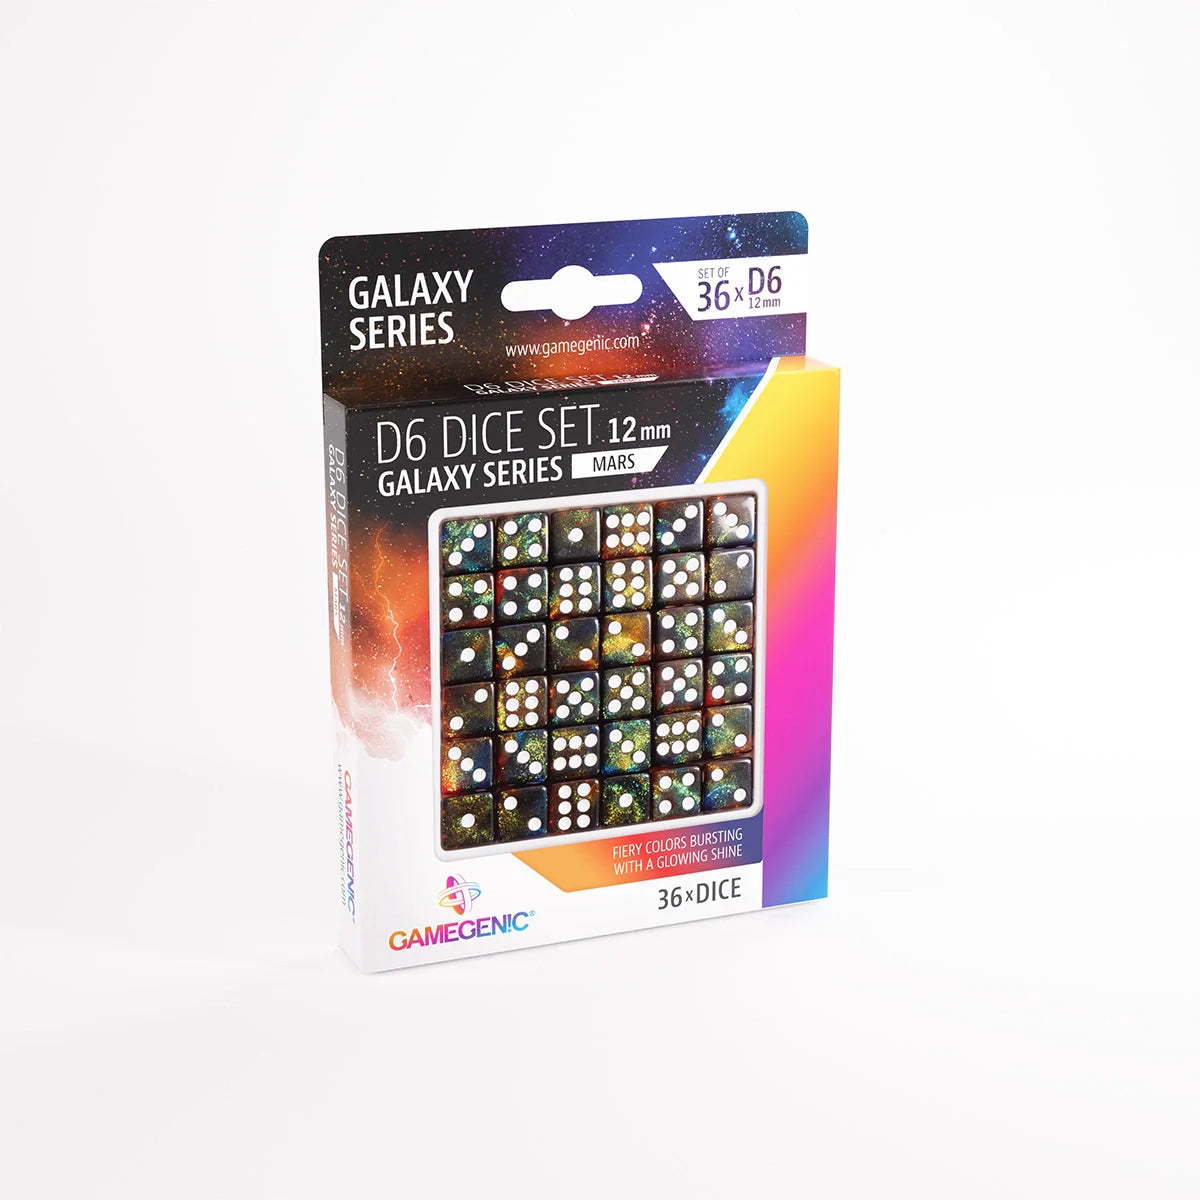 Gamegenic D6 Dice Set - Galaxy Series - Mars (36x 12mm D6)